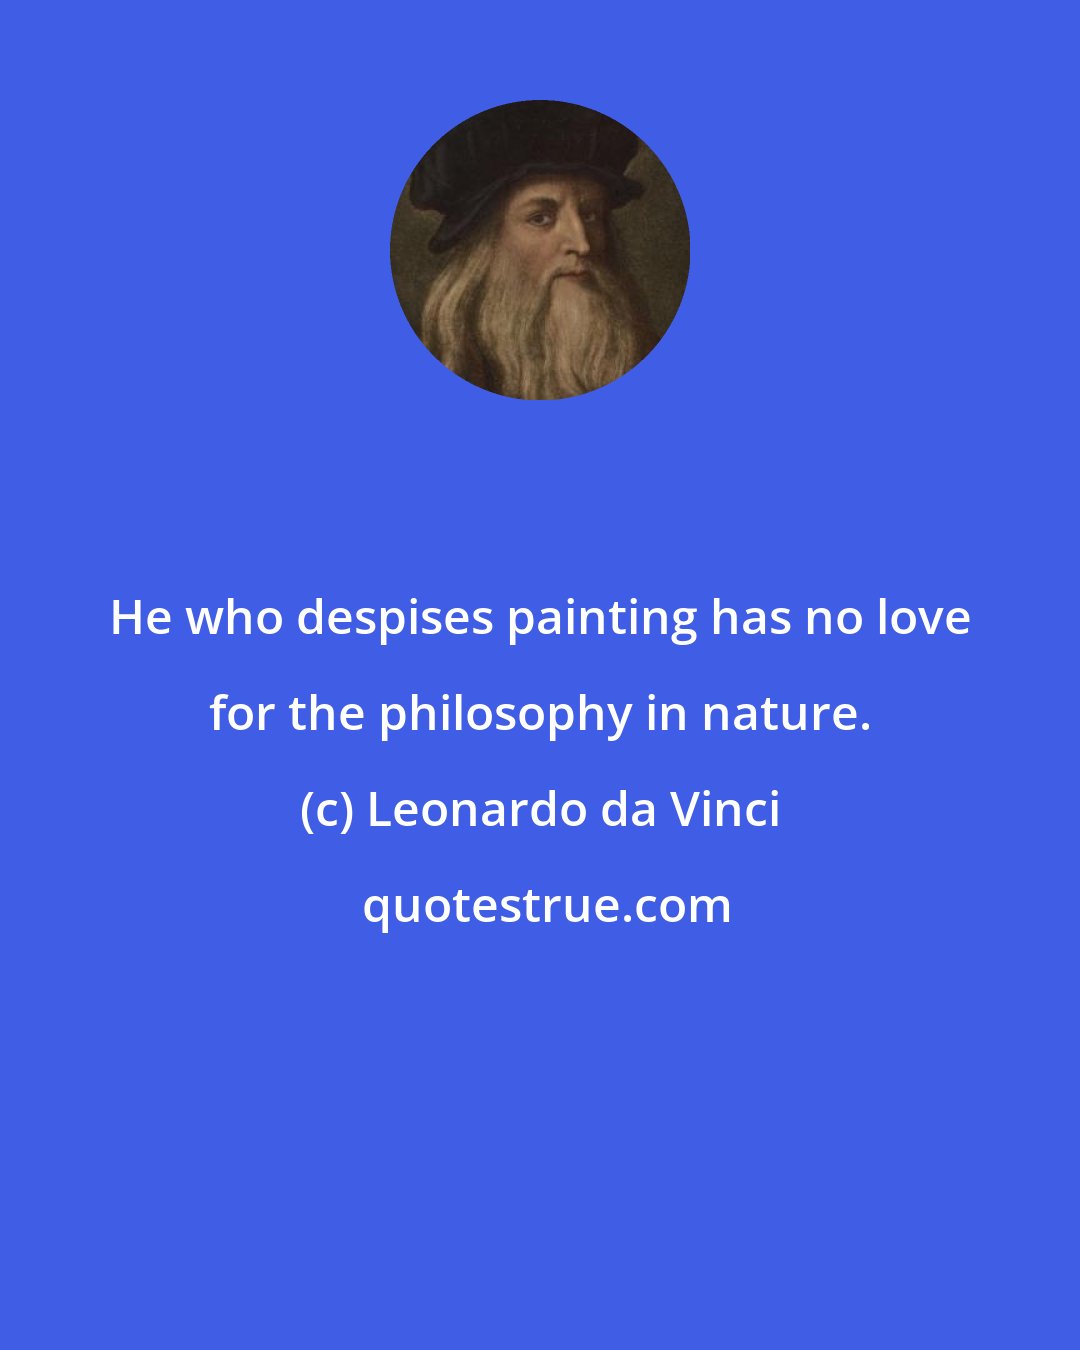 Leonardo da Vinci: He who despises painting has no love for the philosophy in nature.